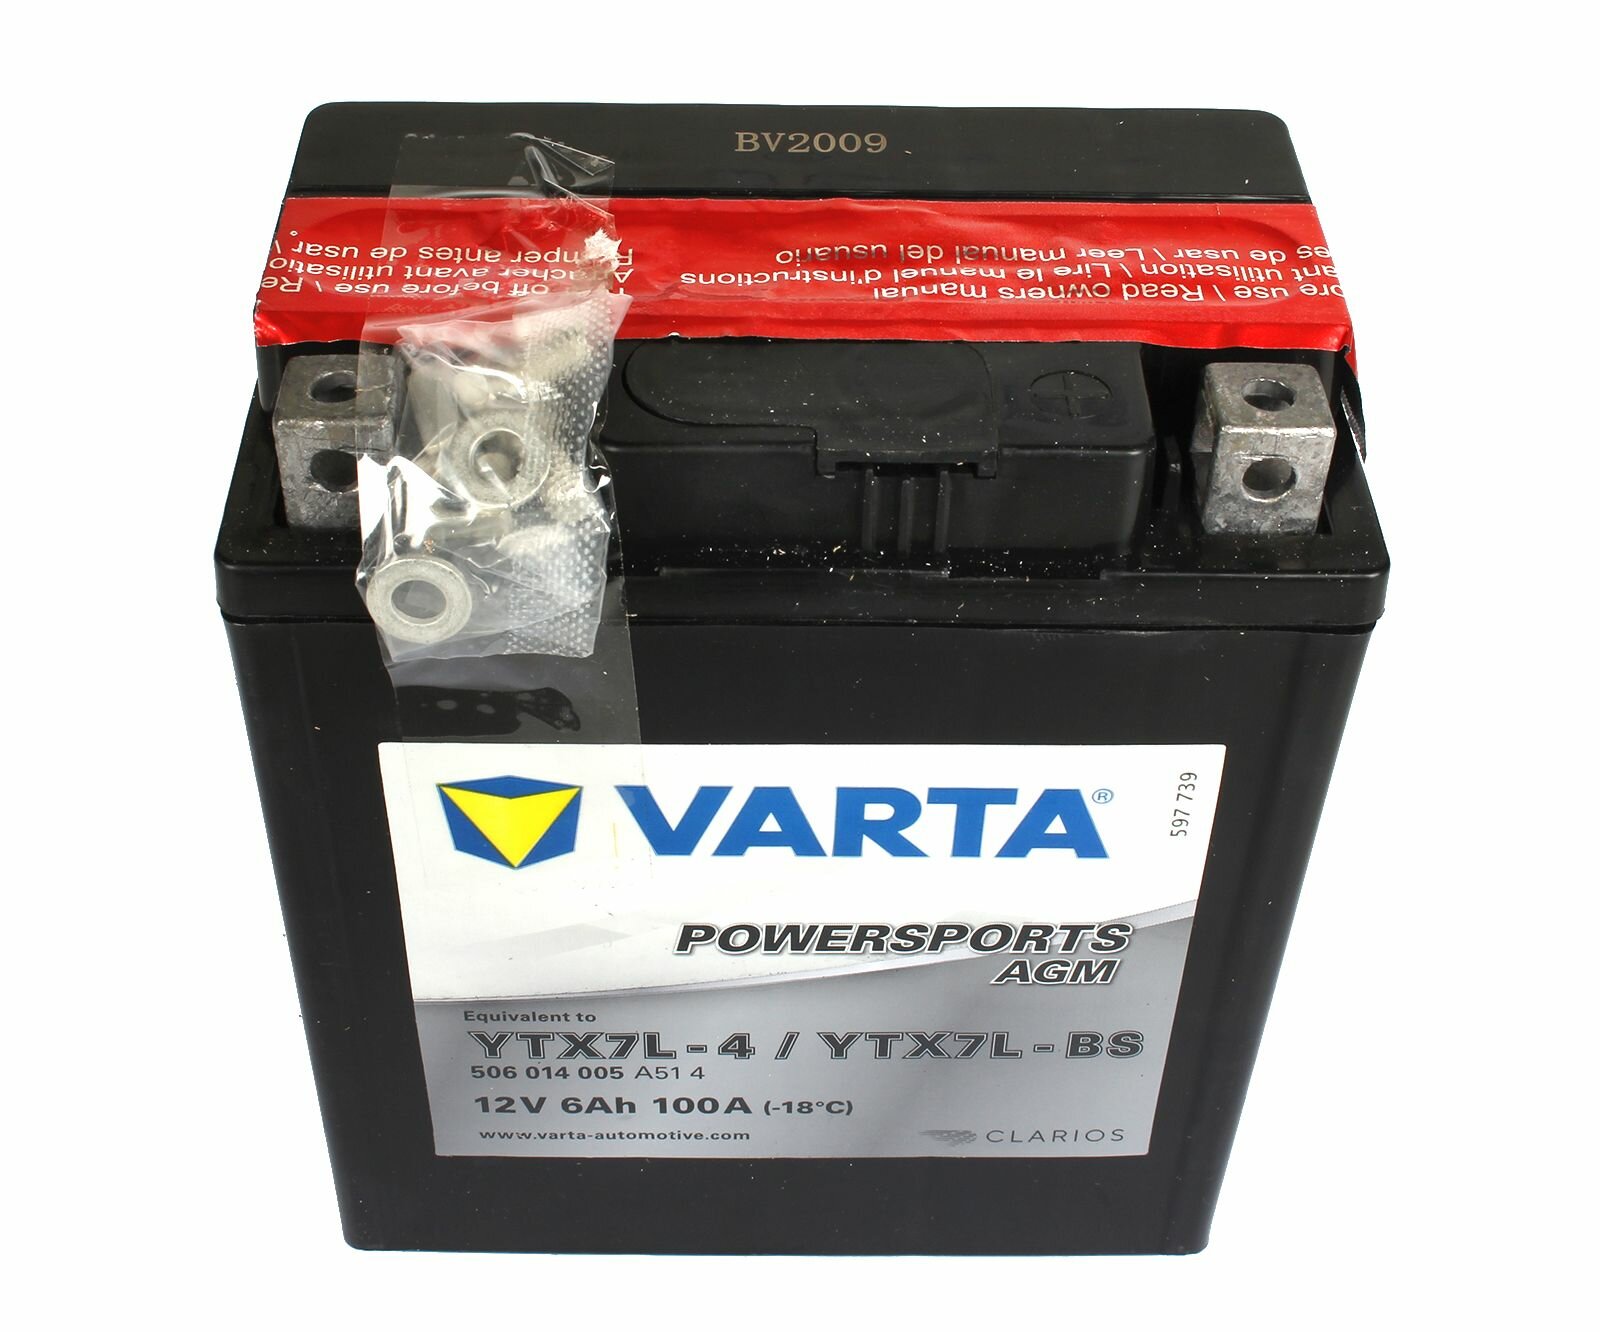 Мото аккумулятор VARTA Powersports AGM 506 014 005 114x71x131